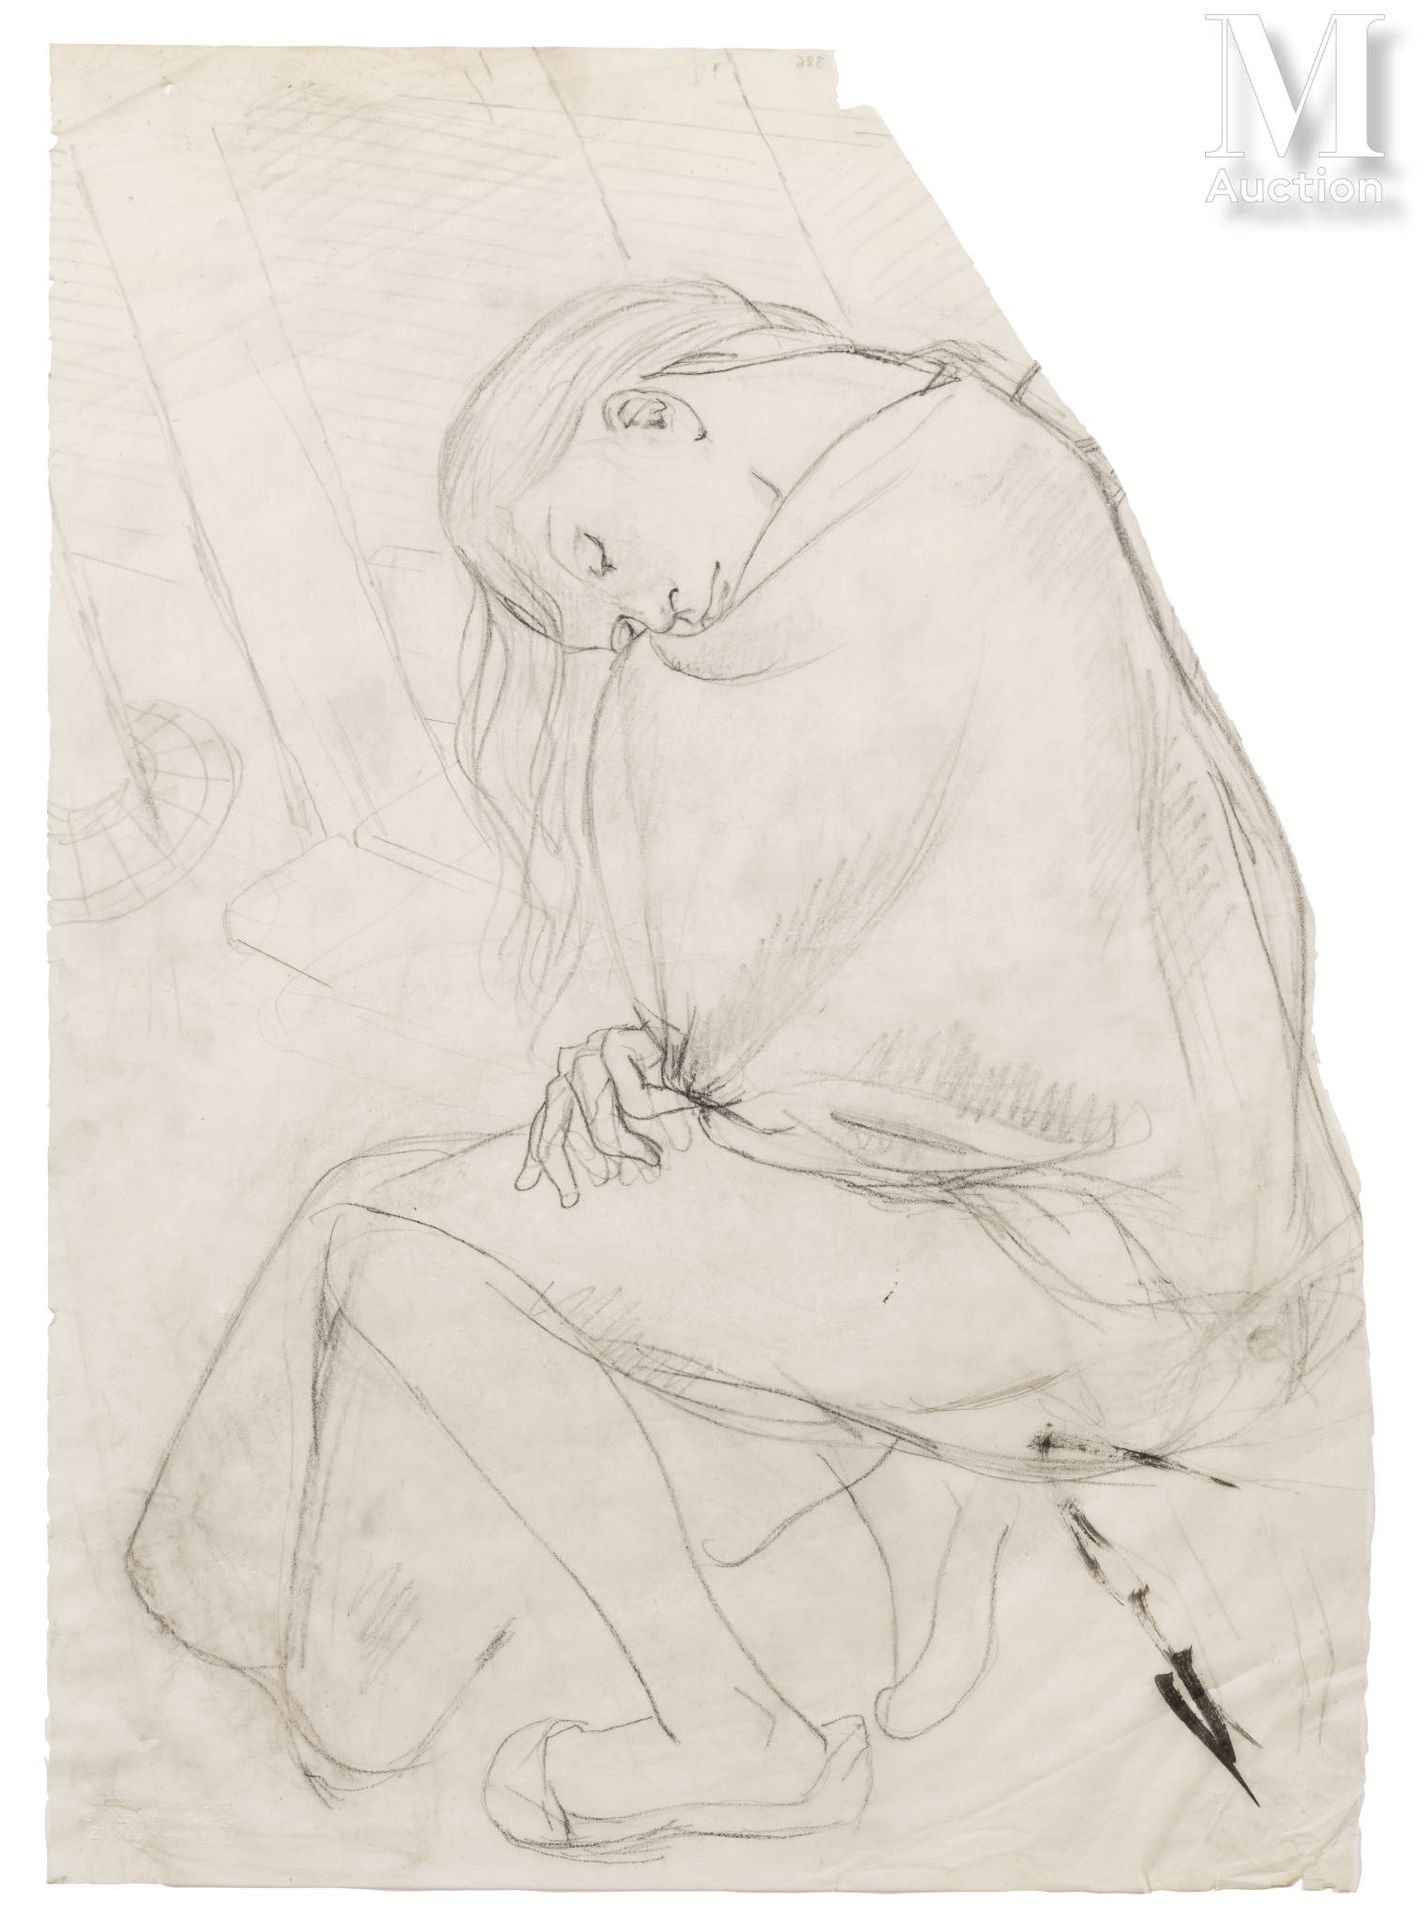 Leonard Tsuguharu FOUJITA (Tokyo 1886 - Zurich 1968) Giovane donna addormentata
&hellip;